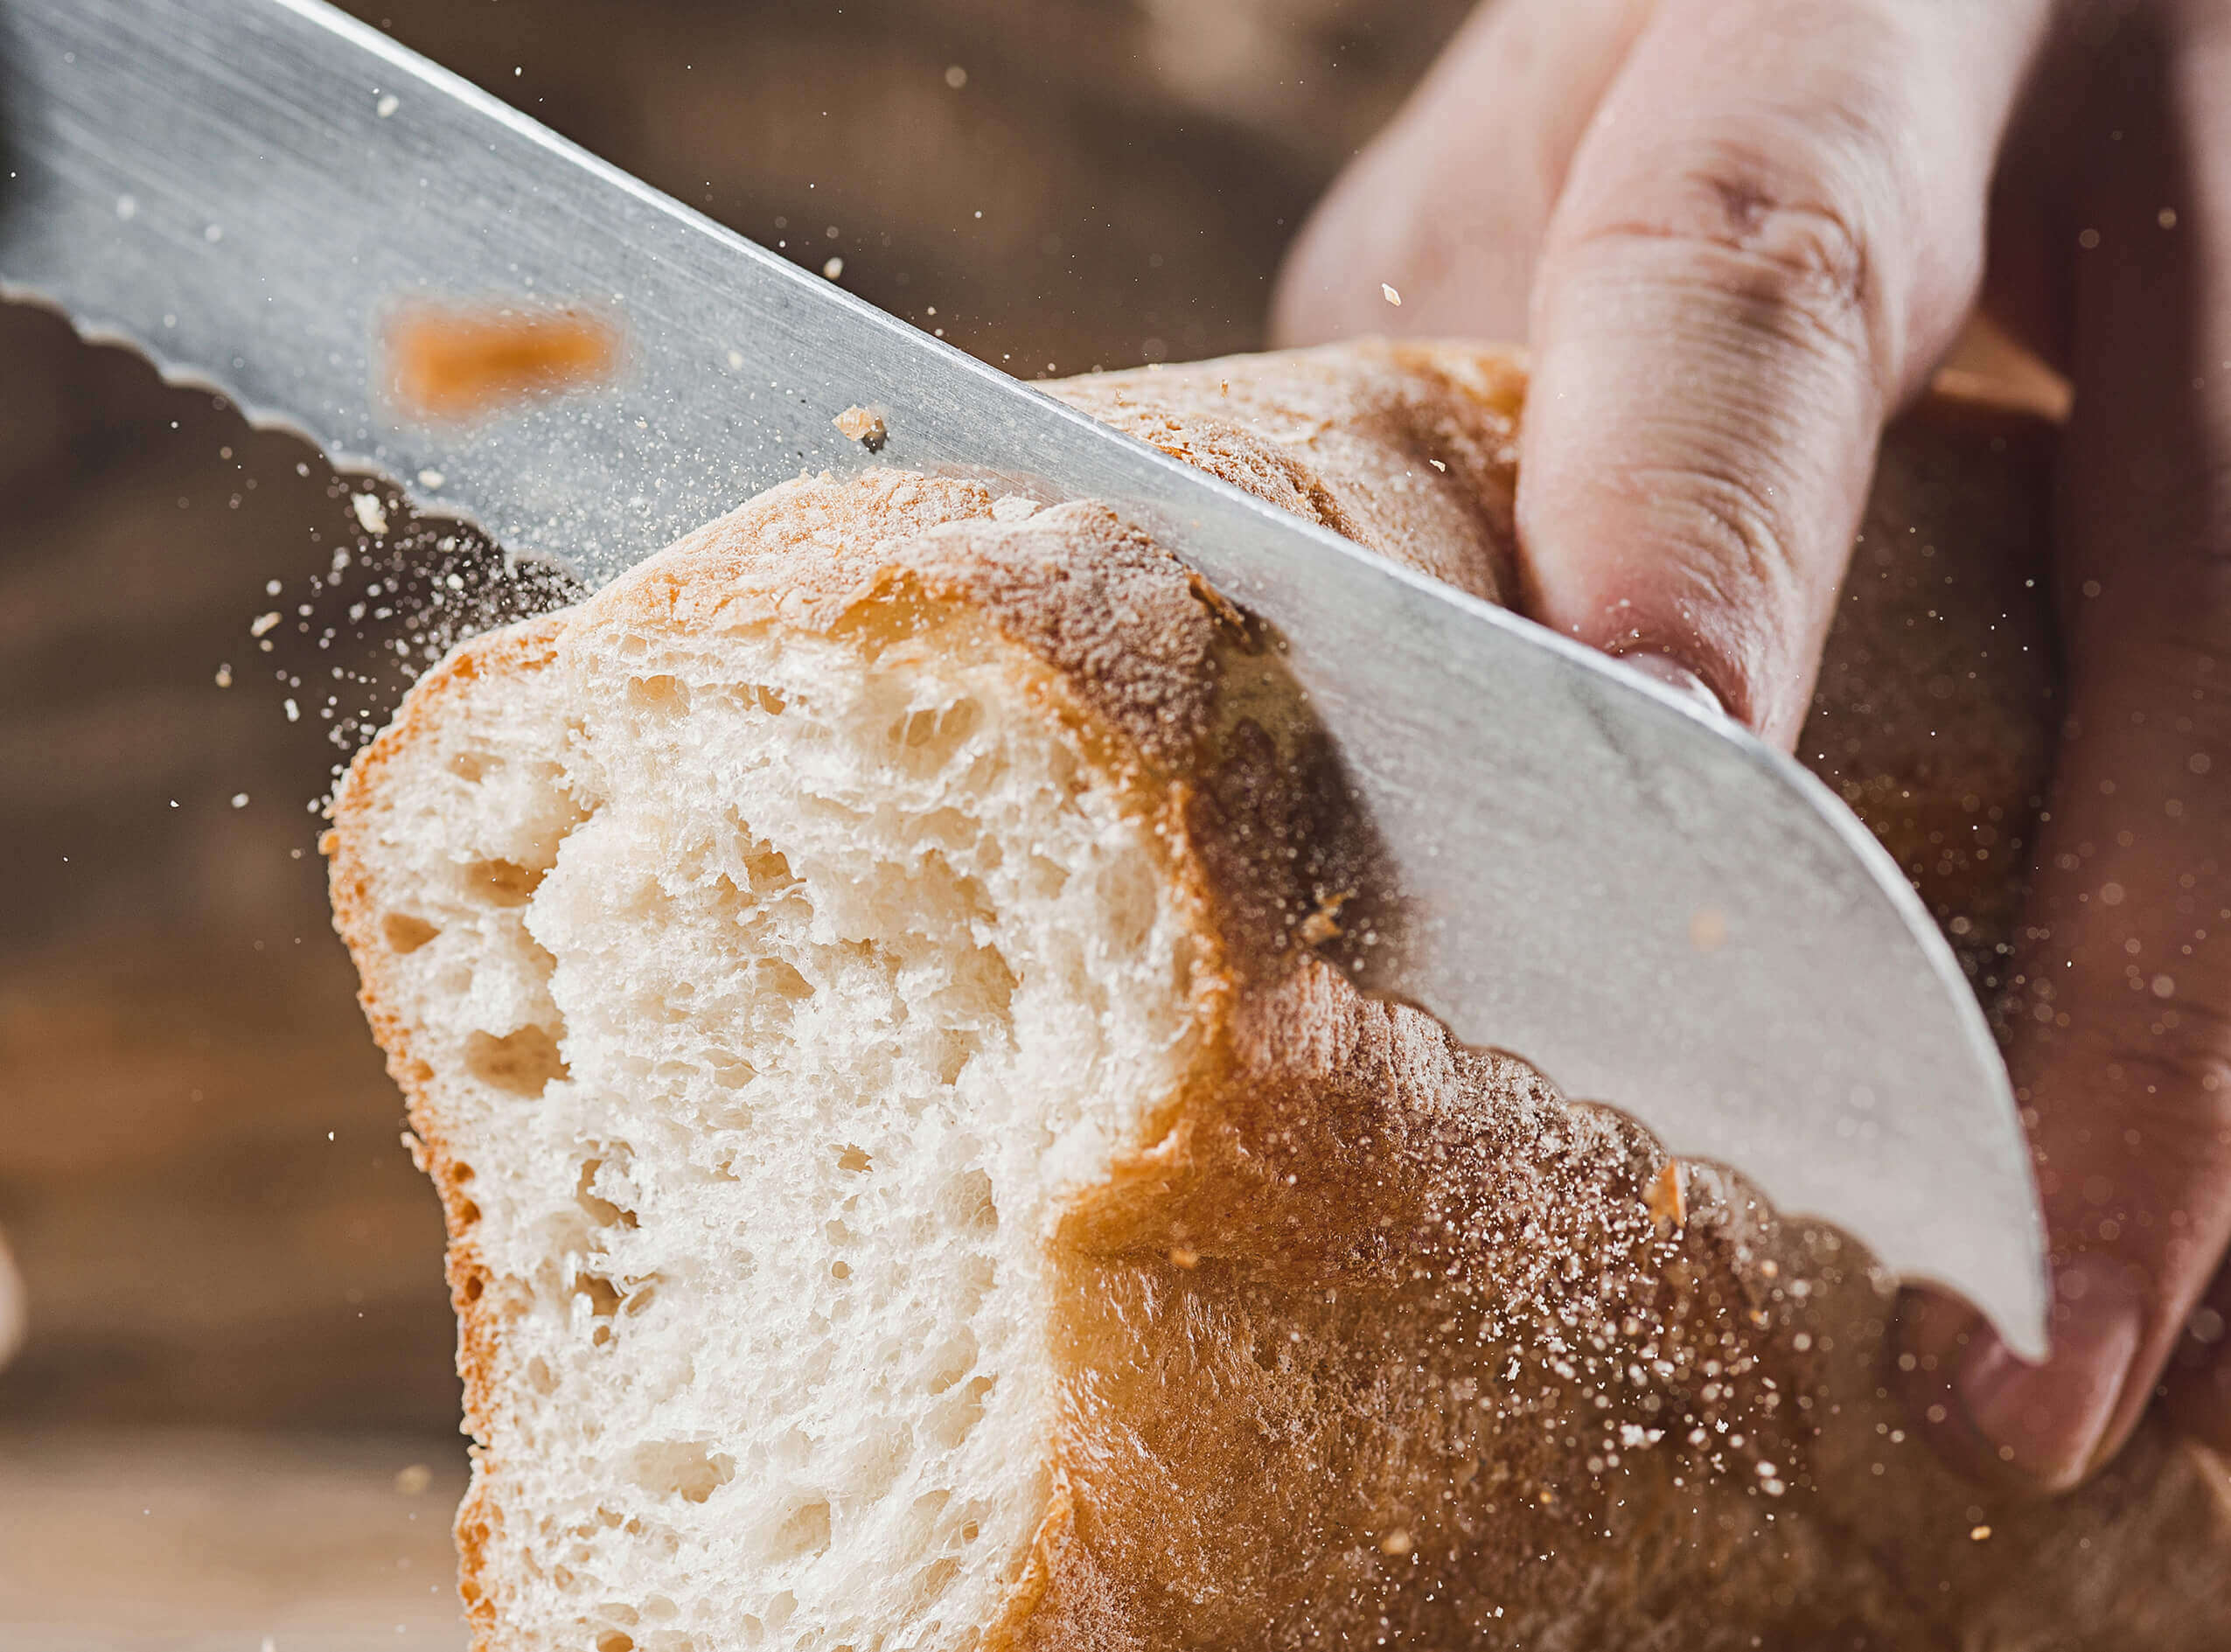 Professional knife slicing loaf of bread